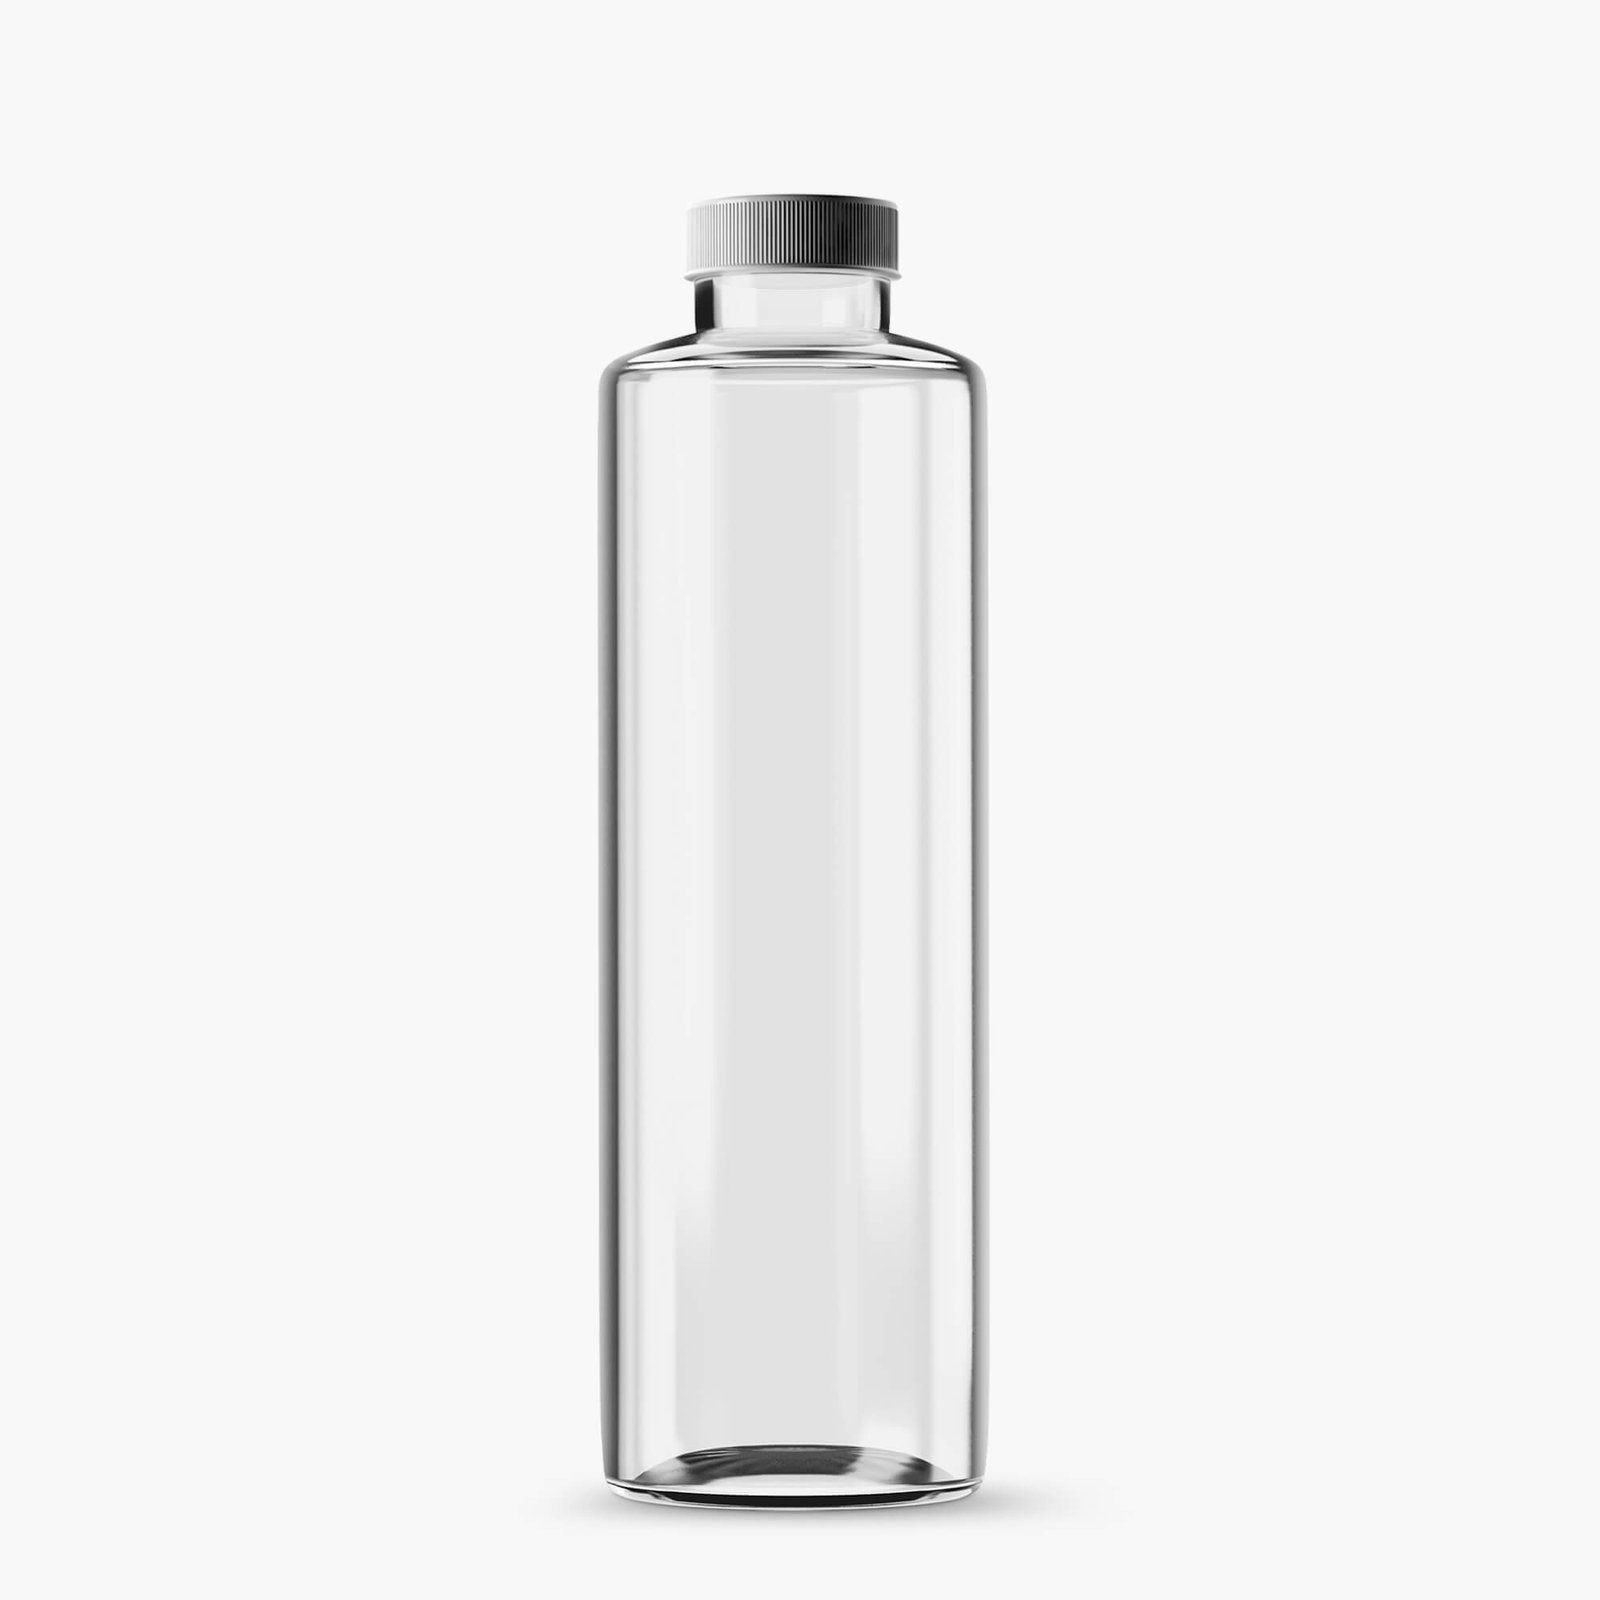 Blank Free Transparent Bottle Mockup PSD Template